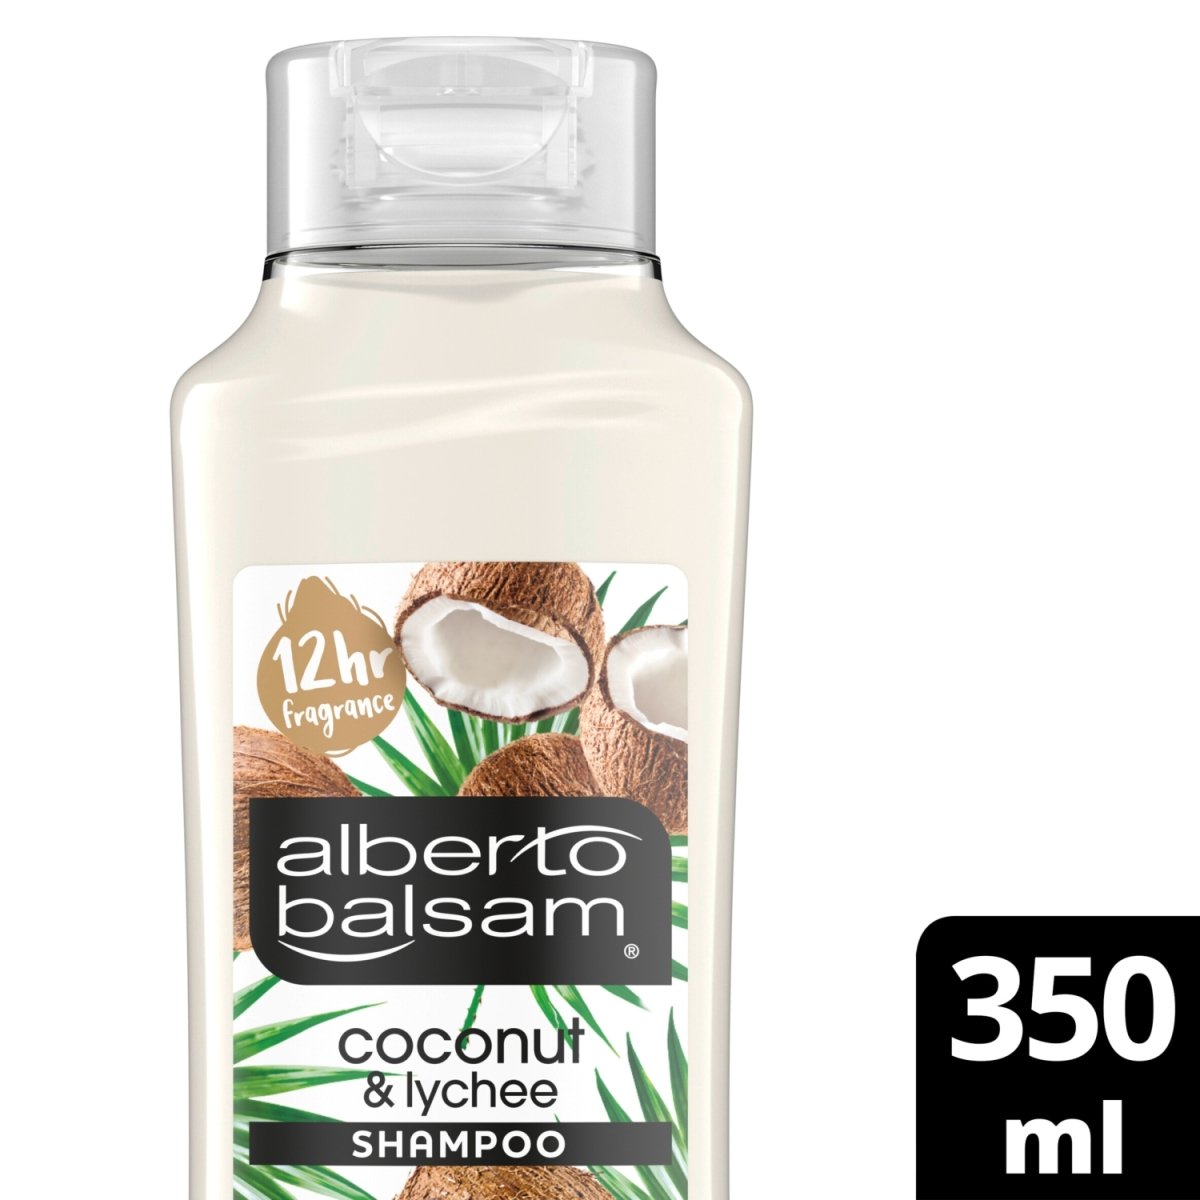 Alberto Balsam Shamp 350ml Coconut & Lychee - Intamarque 8710908177071